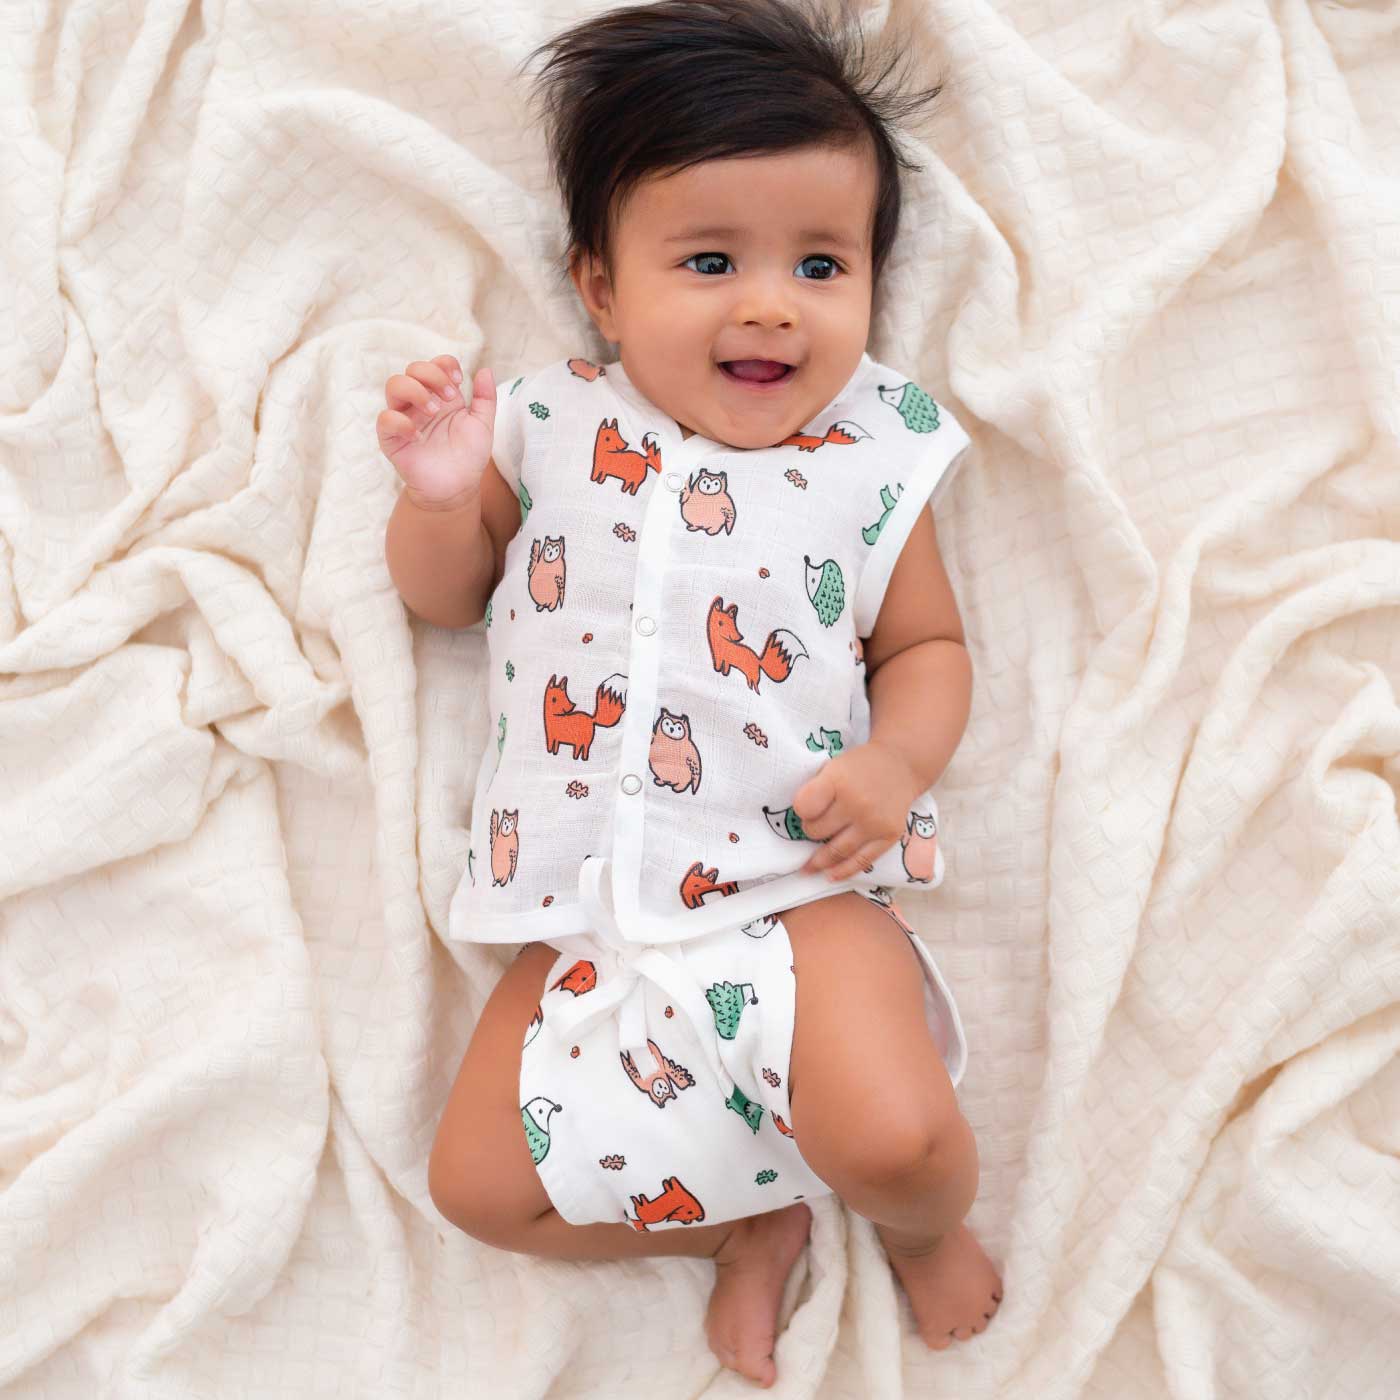 Baby Boy Dress Cloth Sets By Zari Online Shopping Store USA